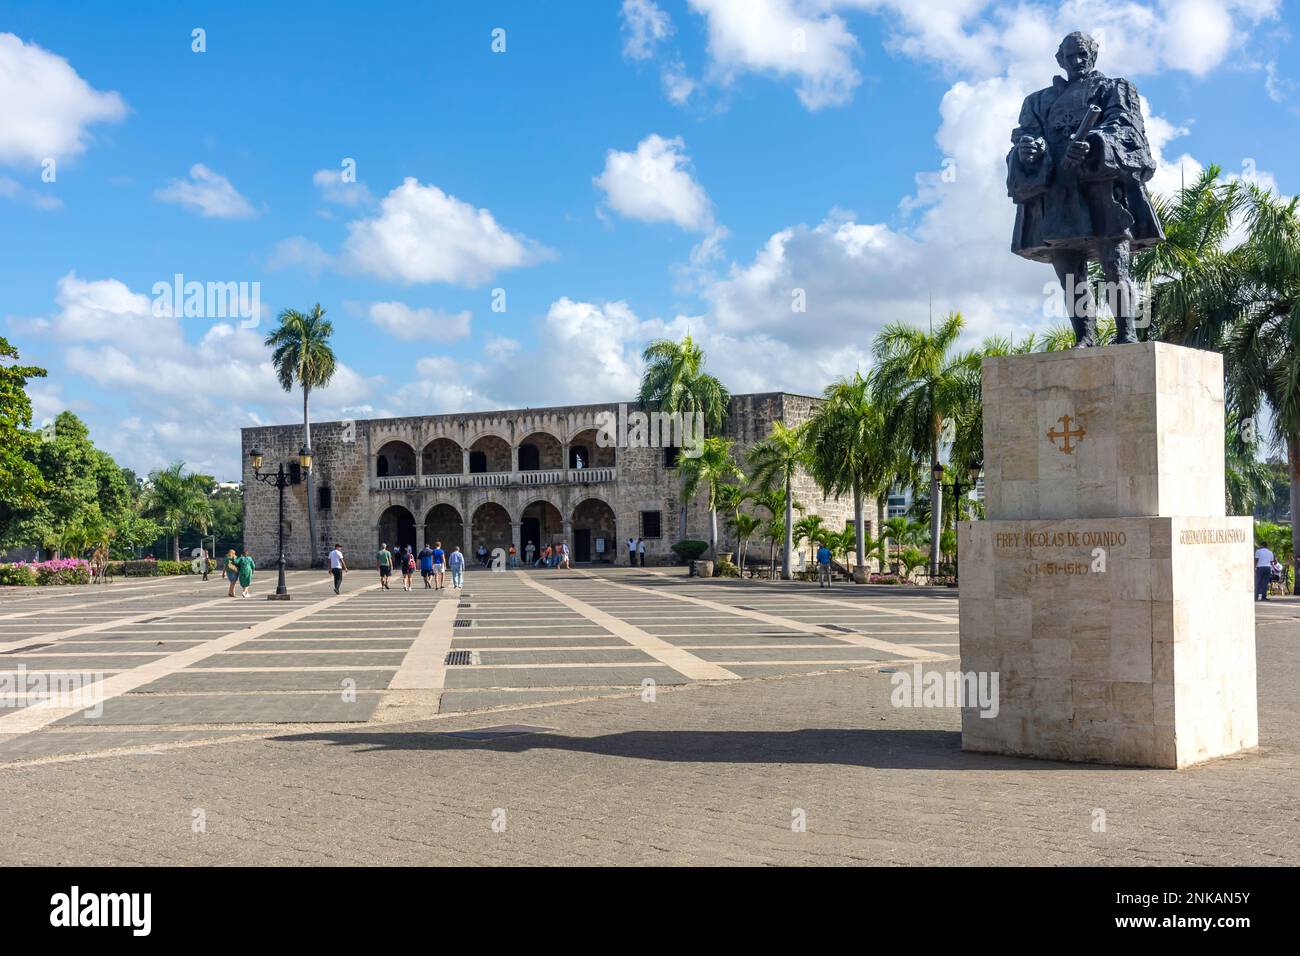 Alcázar de Colón, Plaza de la Espana de la Hispanidad, Santo Domingo, République dominicaine (Republica Dominicana), grandes Antilles, Caraïbes Banque D'Images